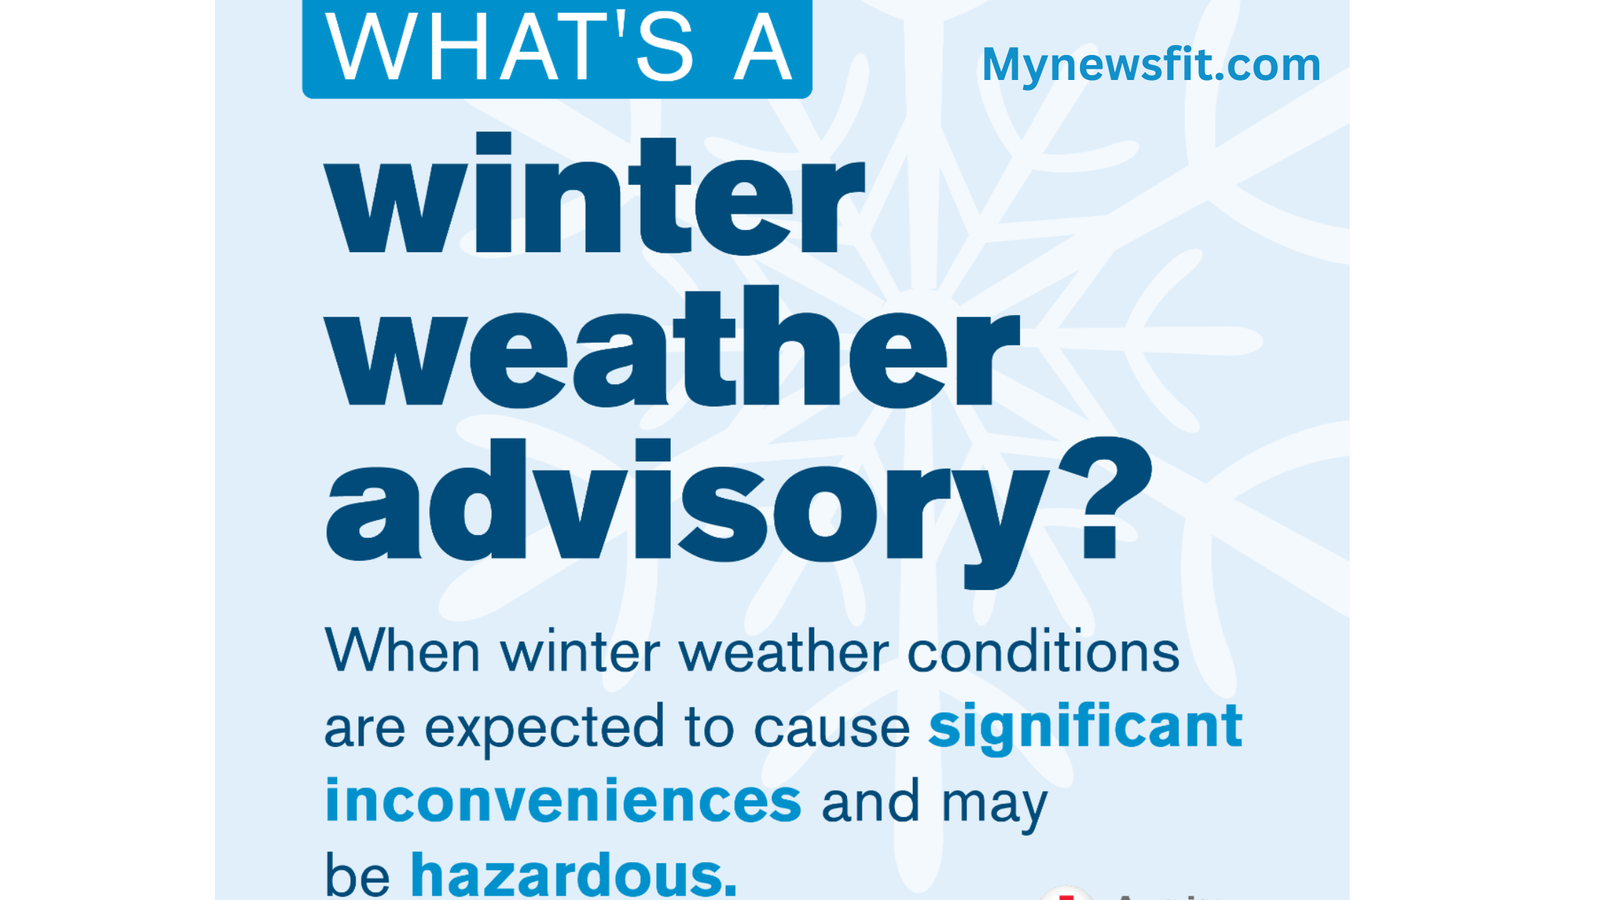 winter weather advisory news